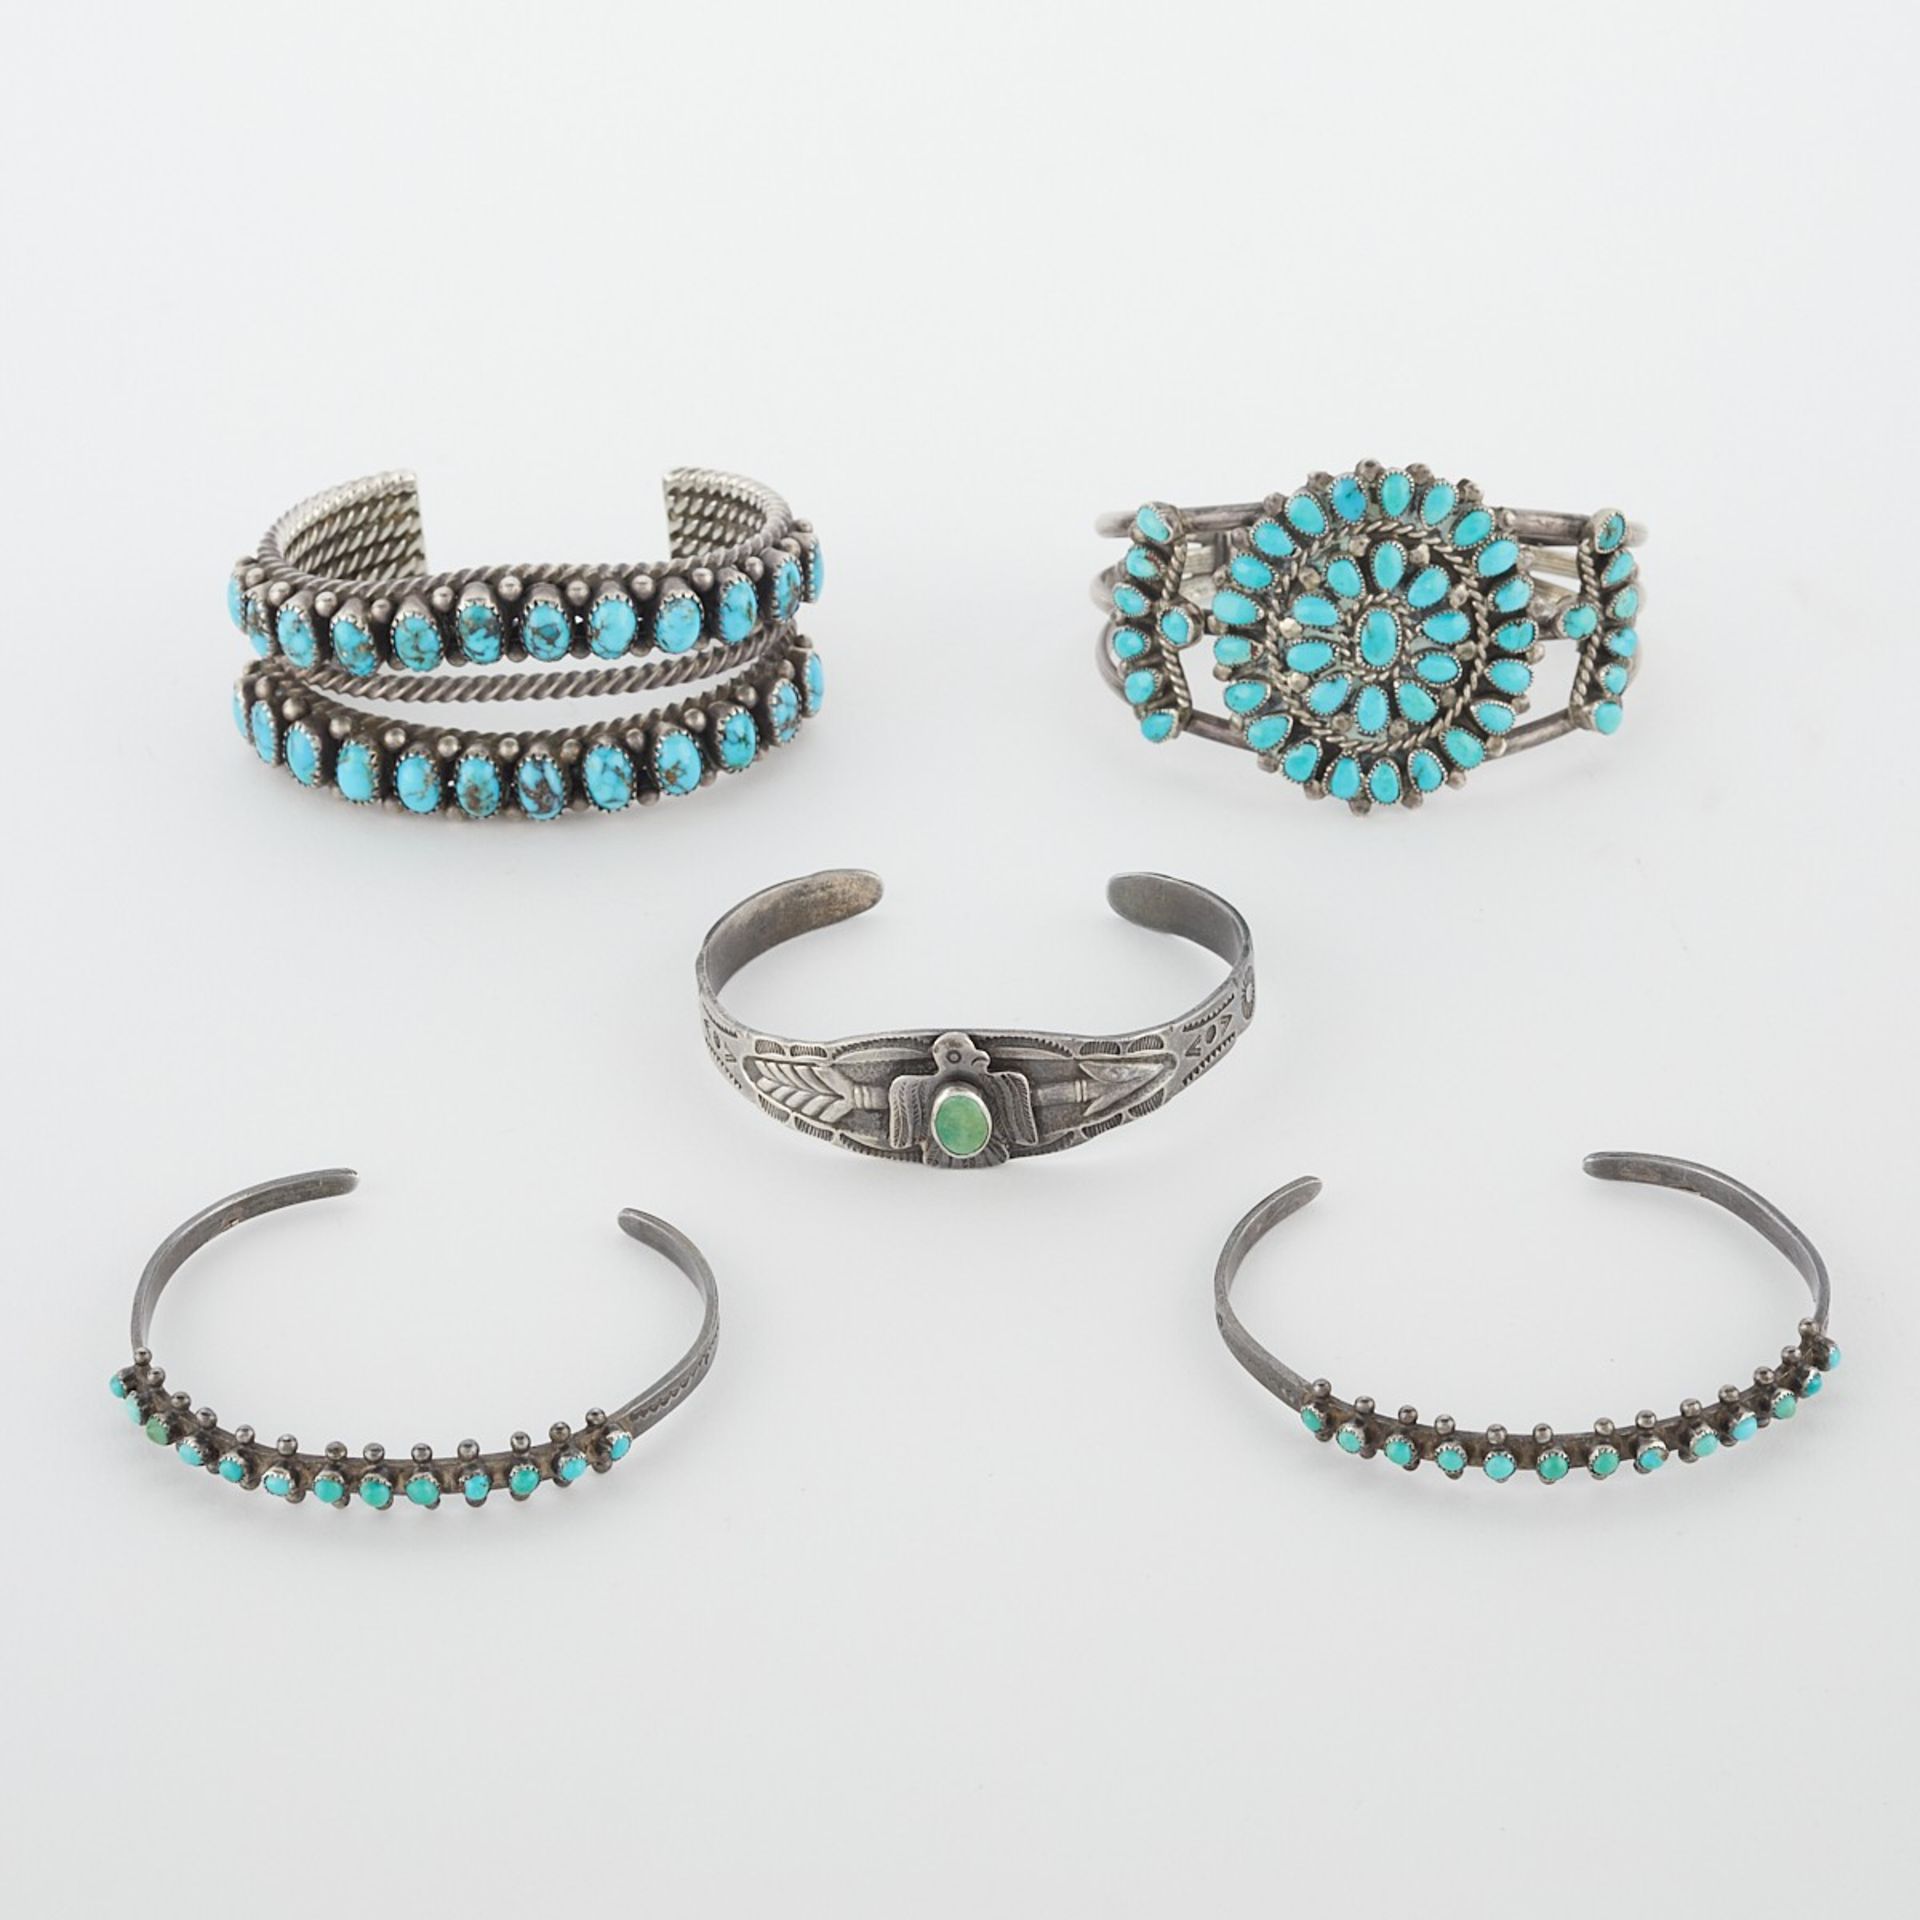 Group of 5 Southwest Turquoise Bracelet Cuffs - Image 2 of 10